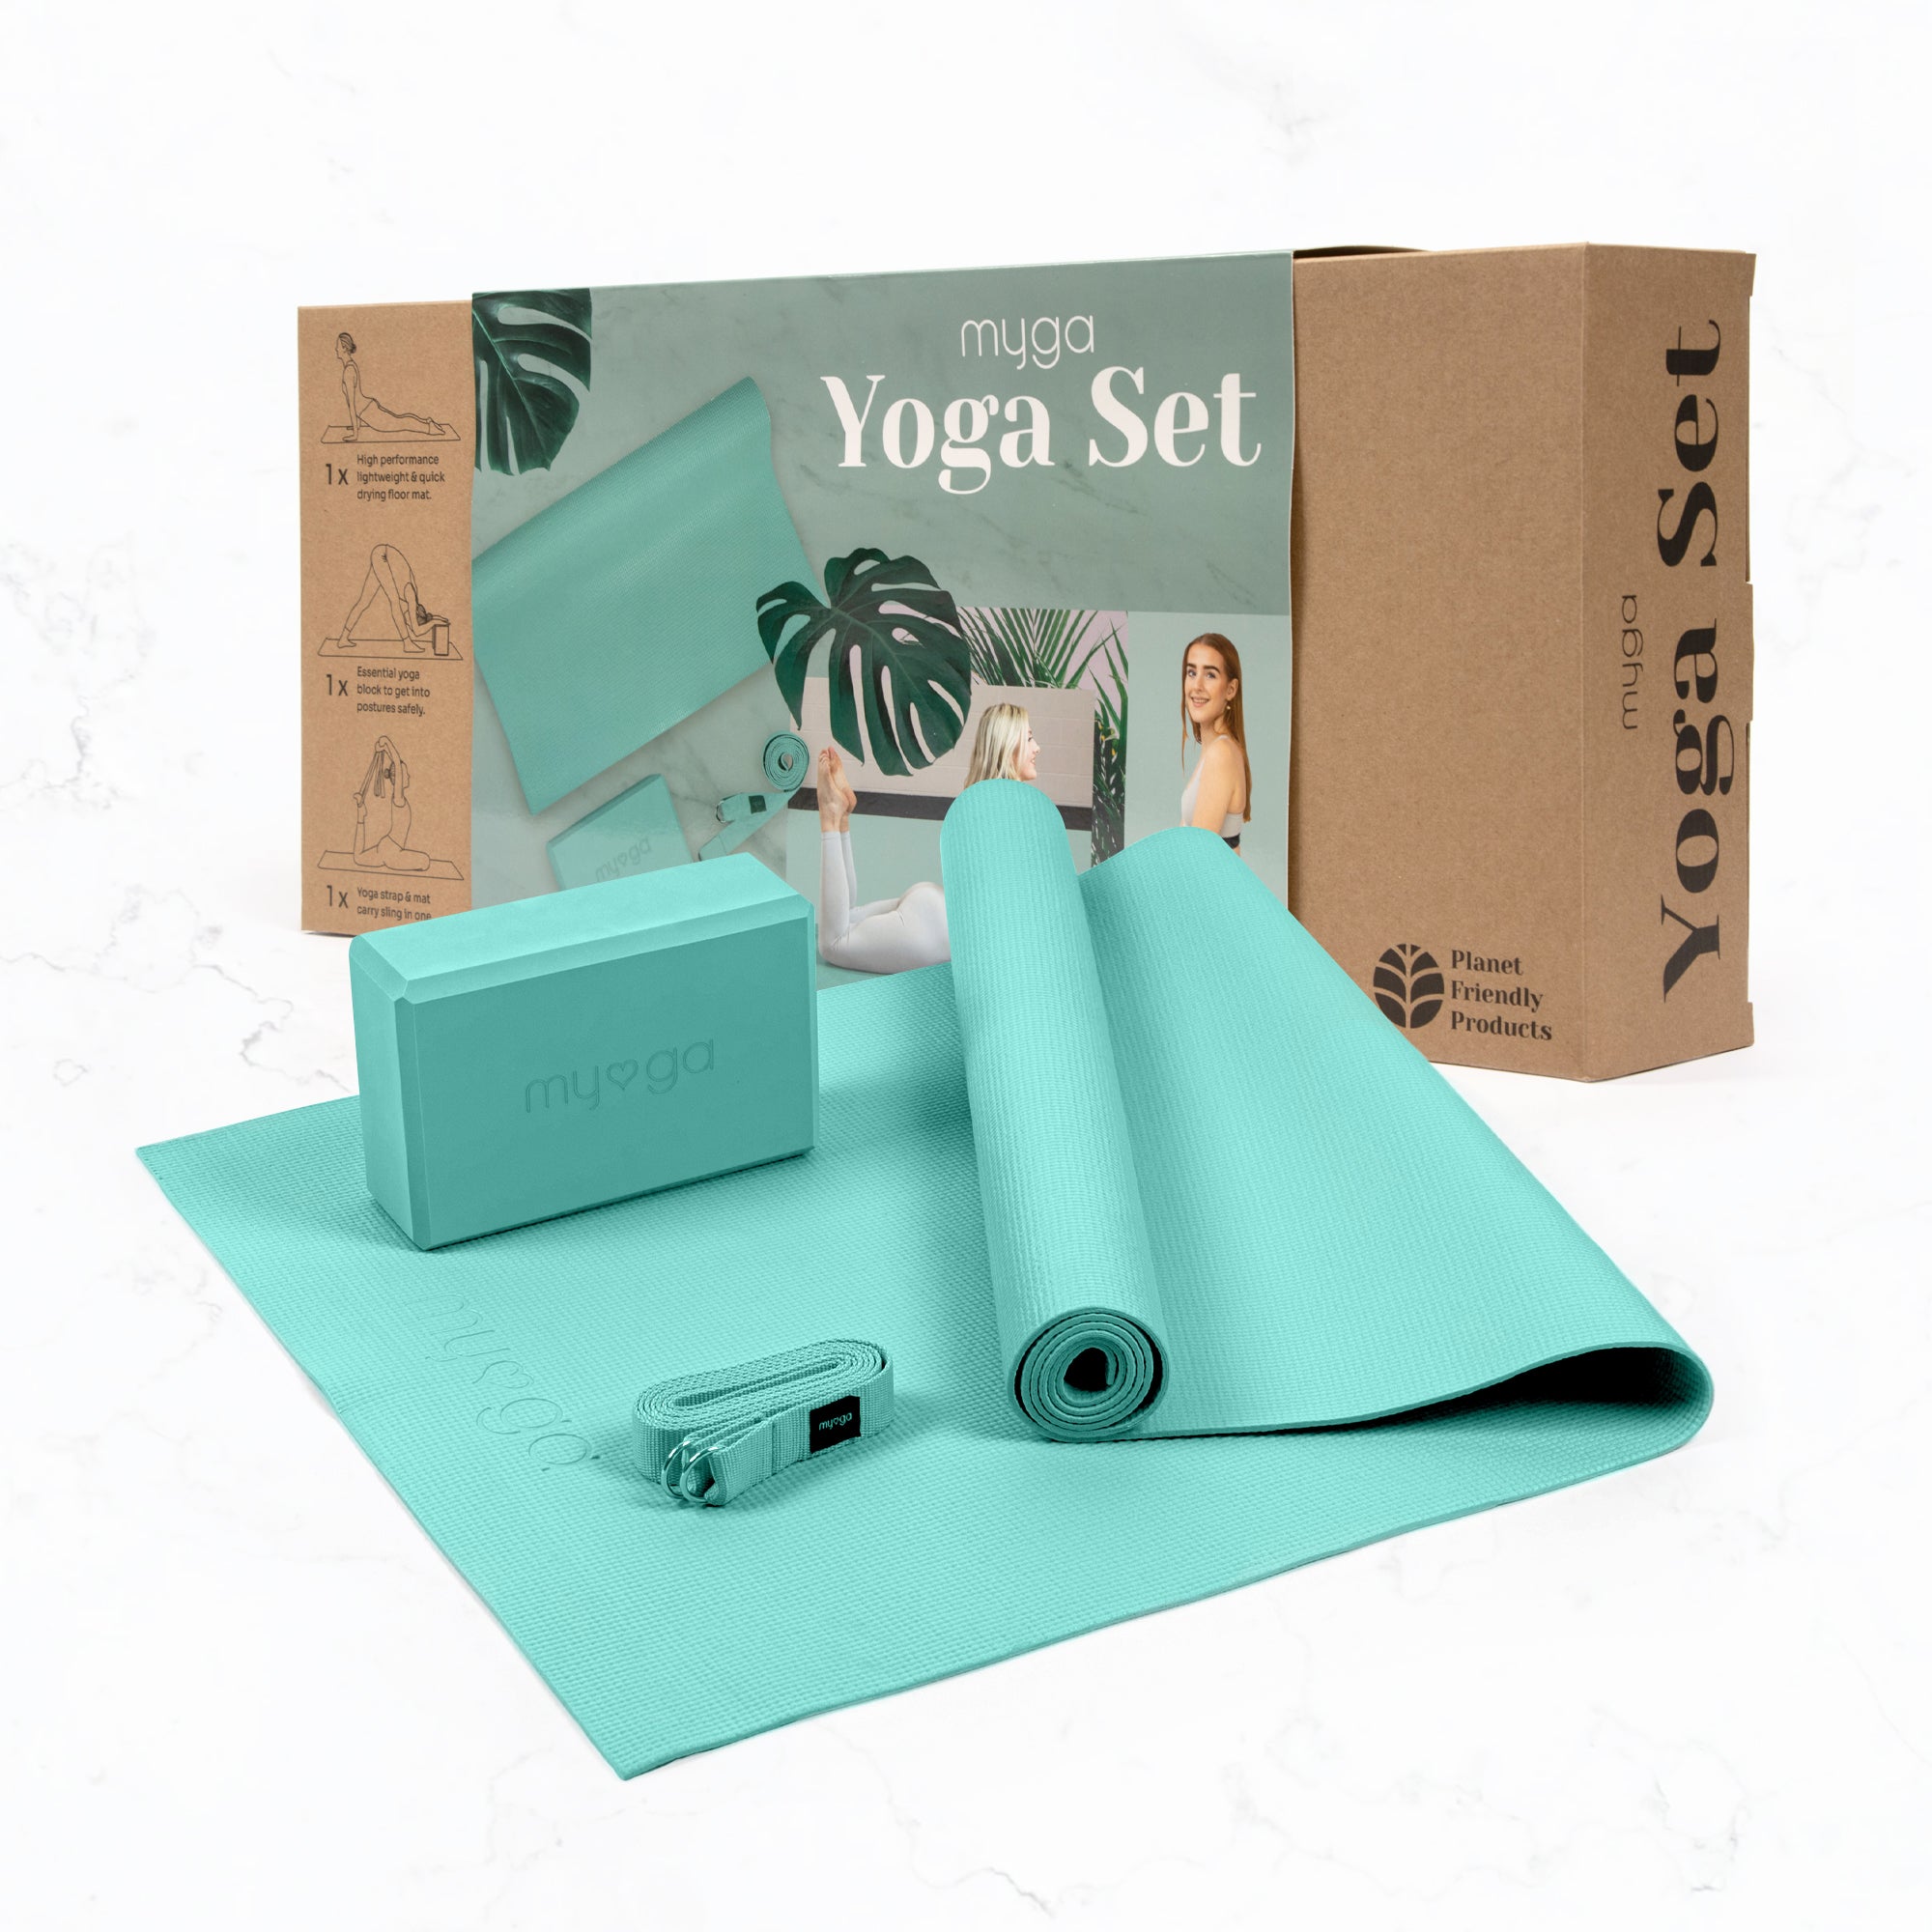 Yoga Kits, Yoga Kits for Beginners